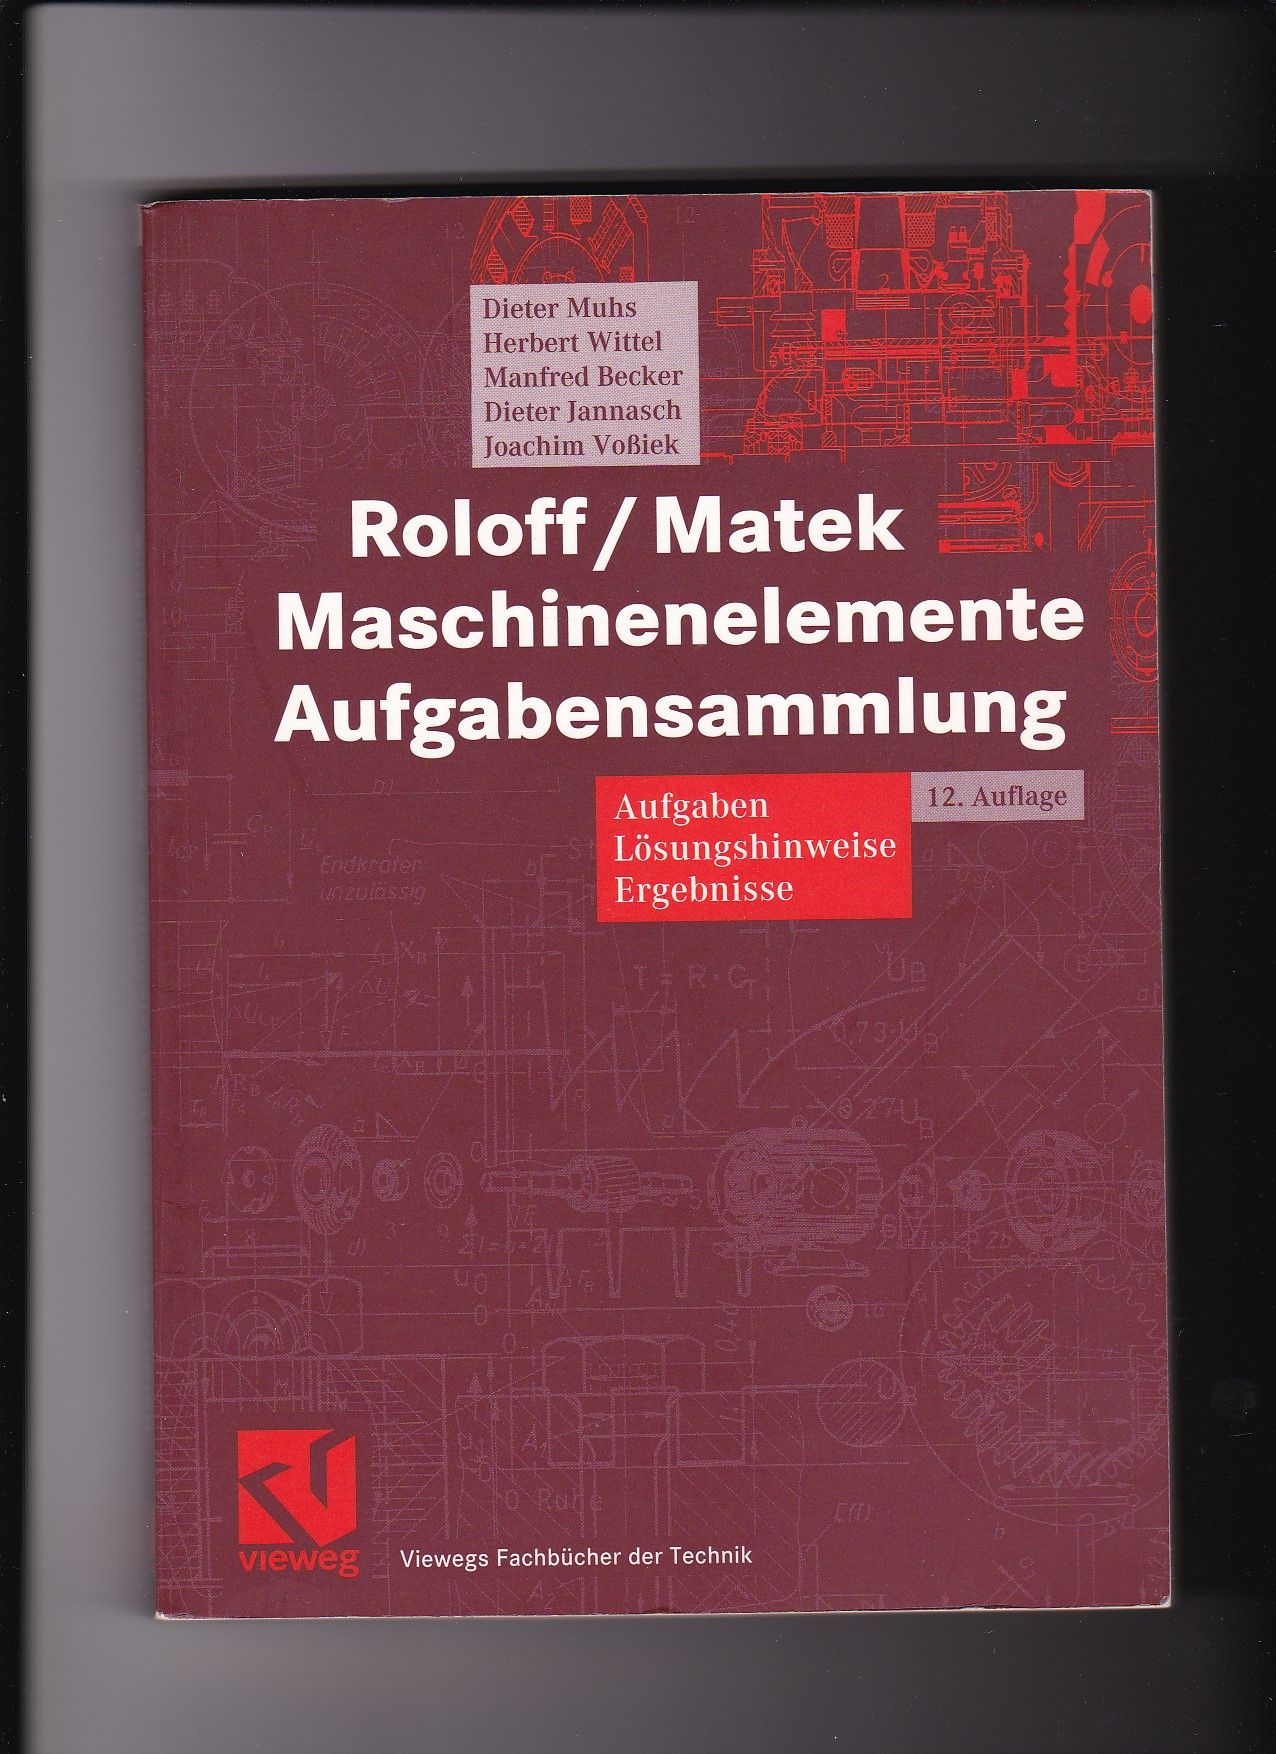 Dieter Muhs, Roloff, Matek,  Maschinenelemente Aufgabensammlung (2003) - Fachbuch - Muhs, Dieter, Herbert Wittel und Manfred Becker